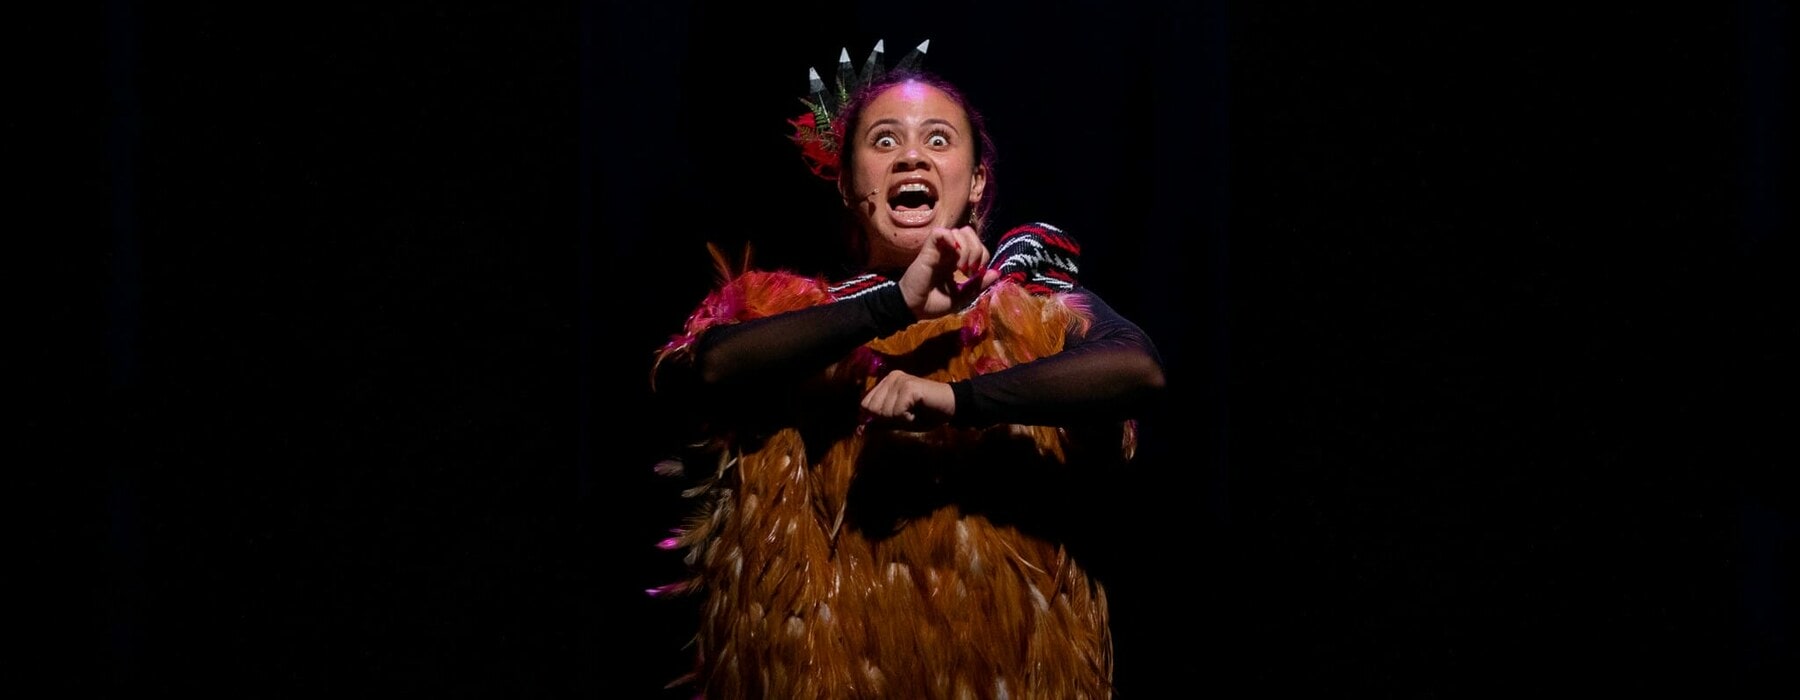 Cast member of Kōpū, Ngākirikiri Kershaw, performing at Te Pou Theatre in Auckland.